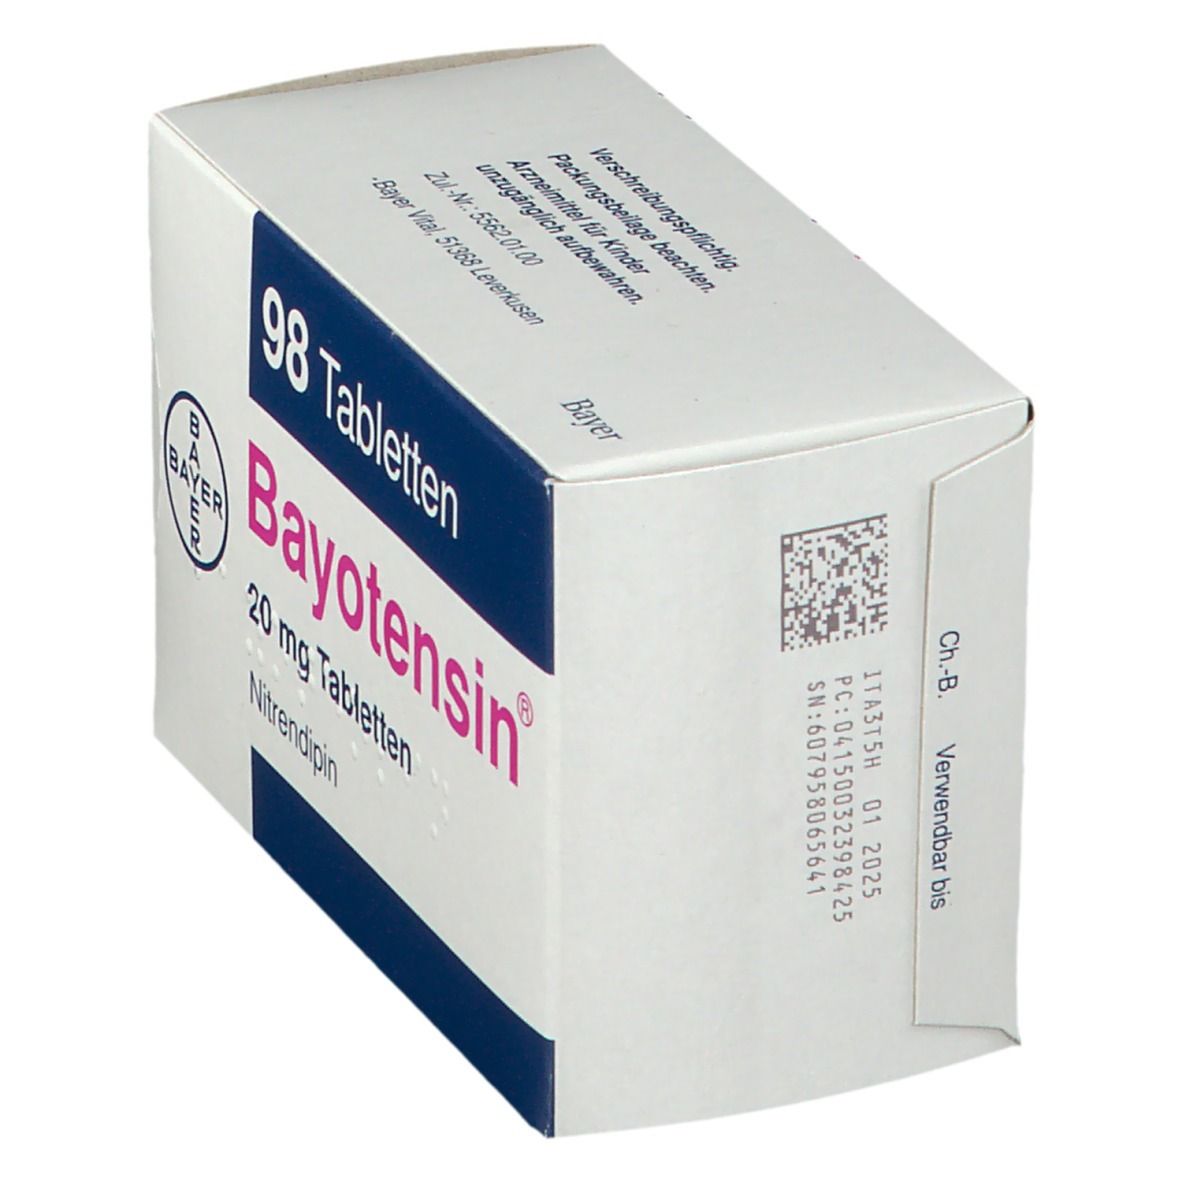 Bayotensin®